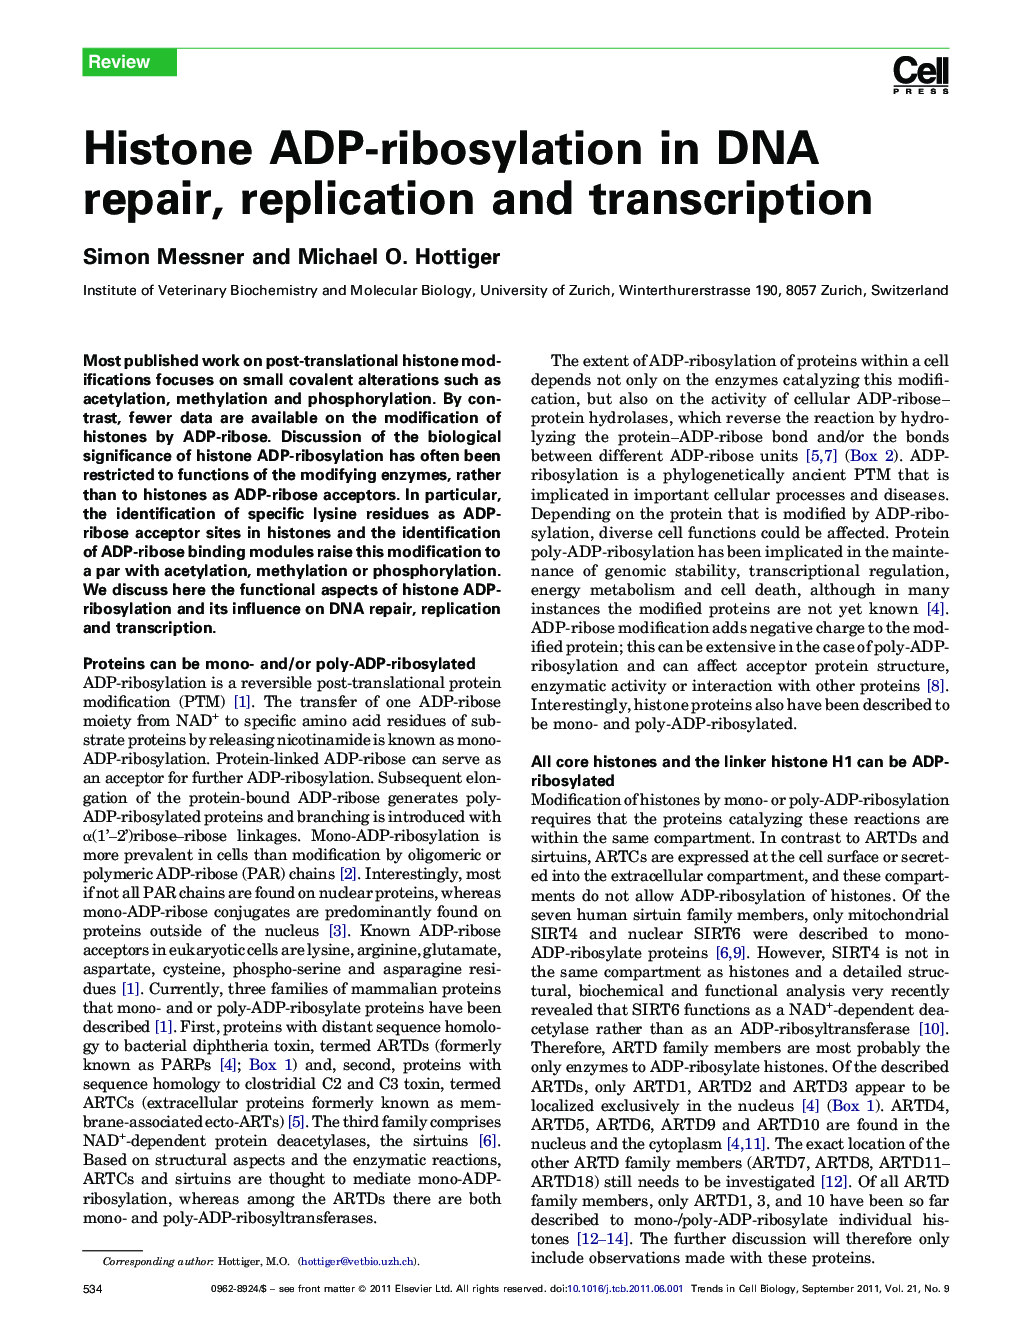 Histone ADP-ribosylation in DNA repair, replication and transcription